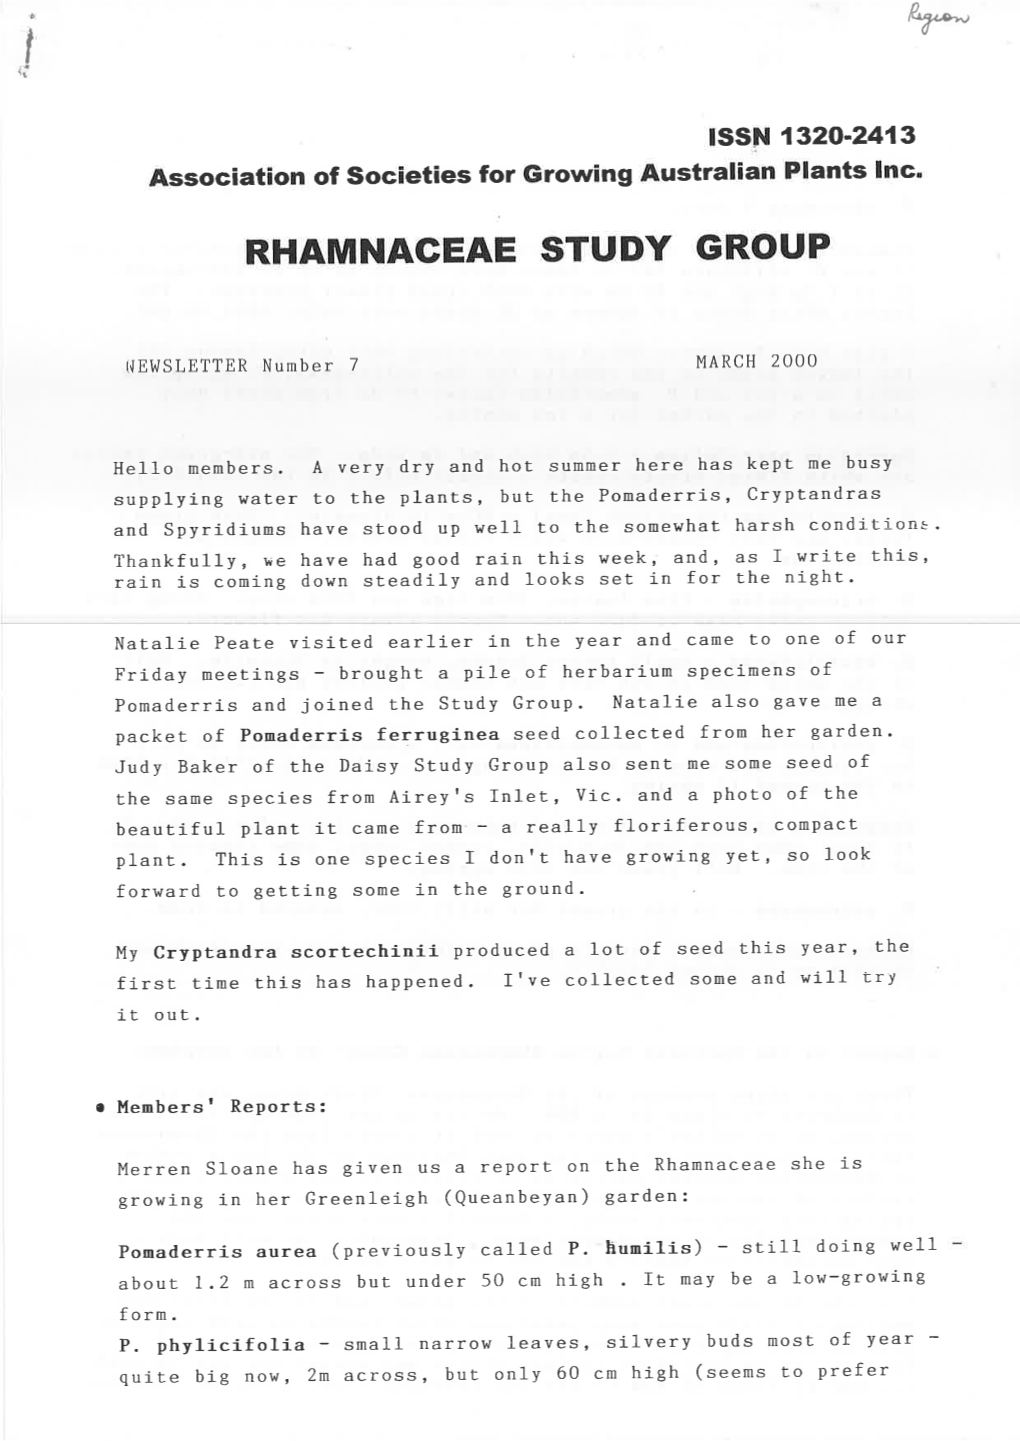 Rhamnaceae Study Group